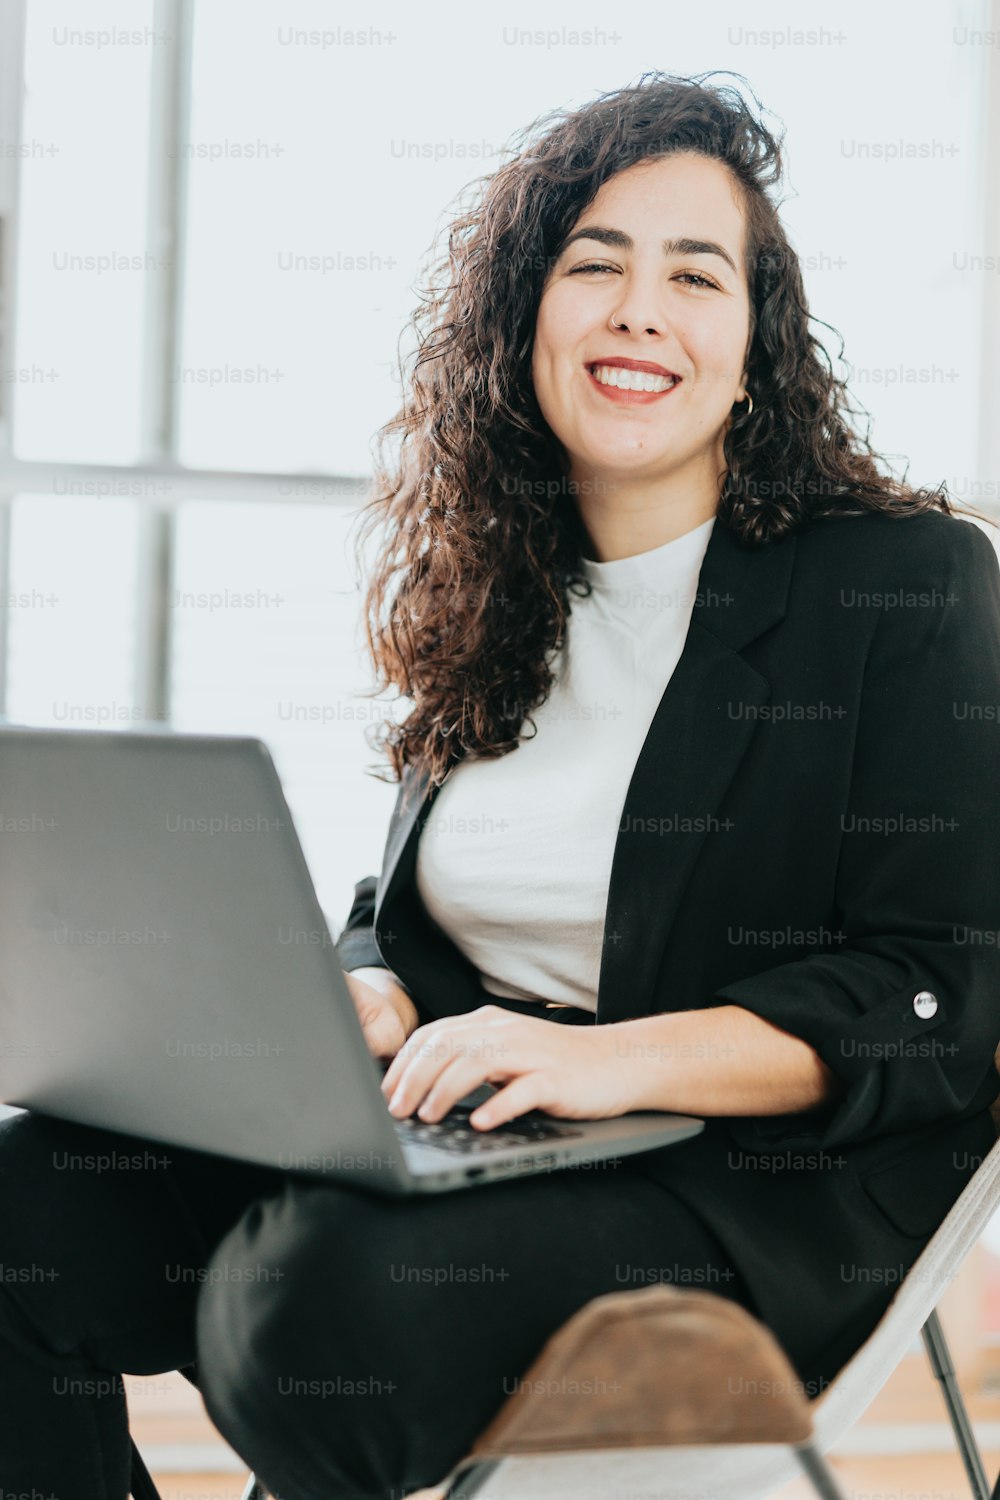 Una donna seduta su una sedia con un computer portatile